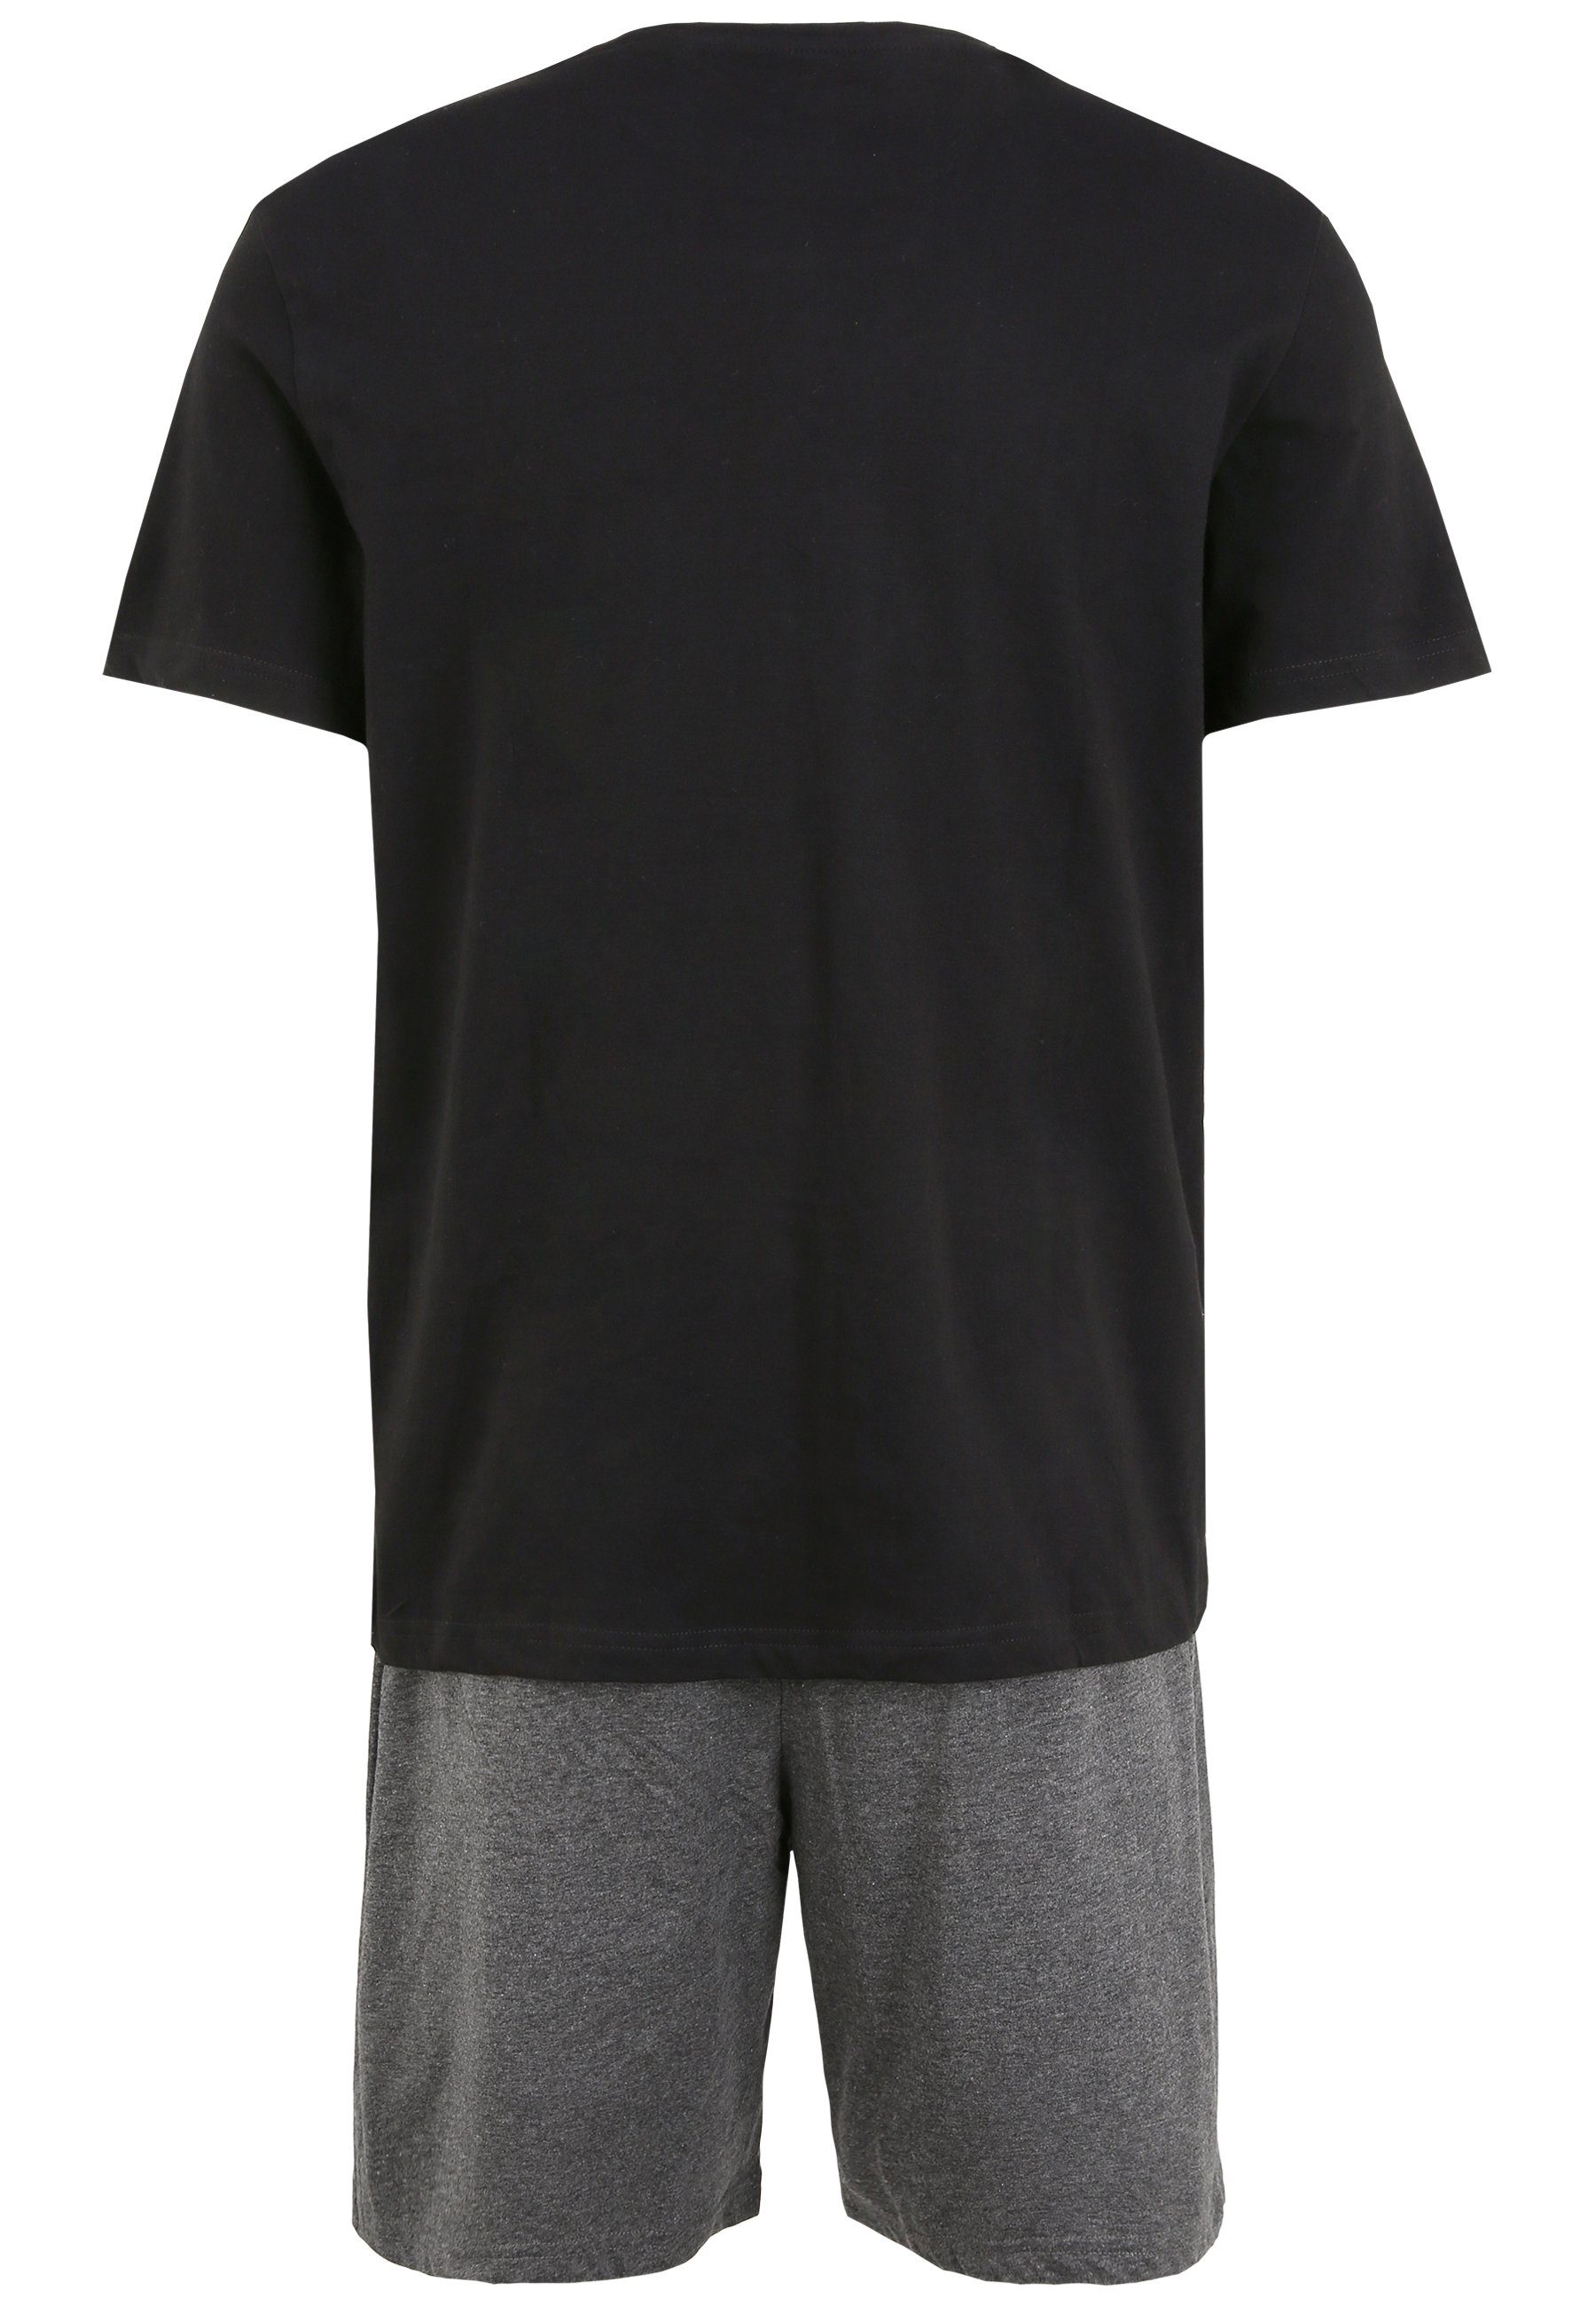 Charcoal Lounge to Loungepants Black Recovered - the Pyjama Back Logo Set - Future Kanji